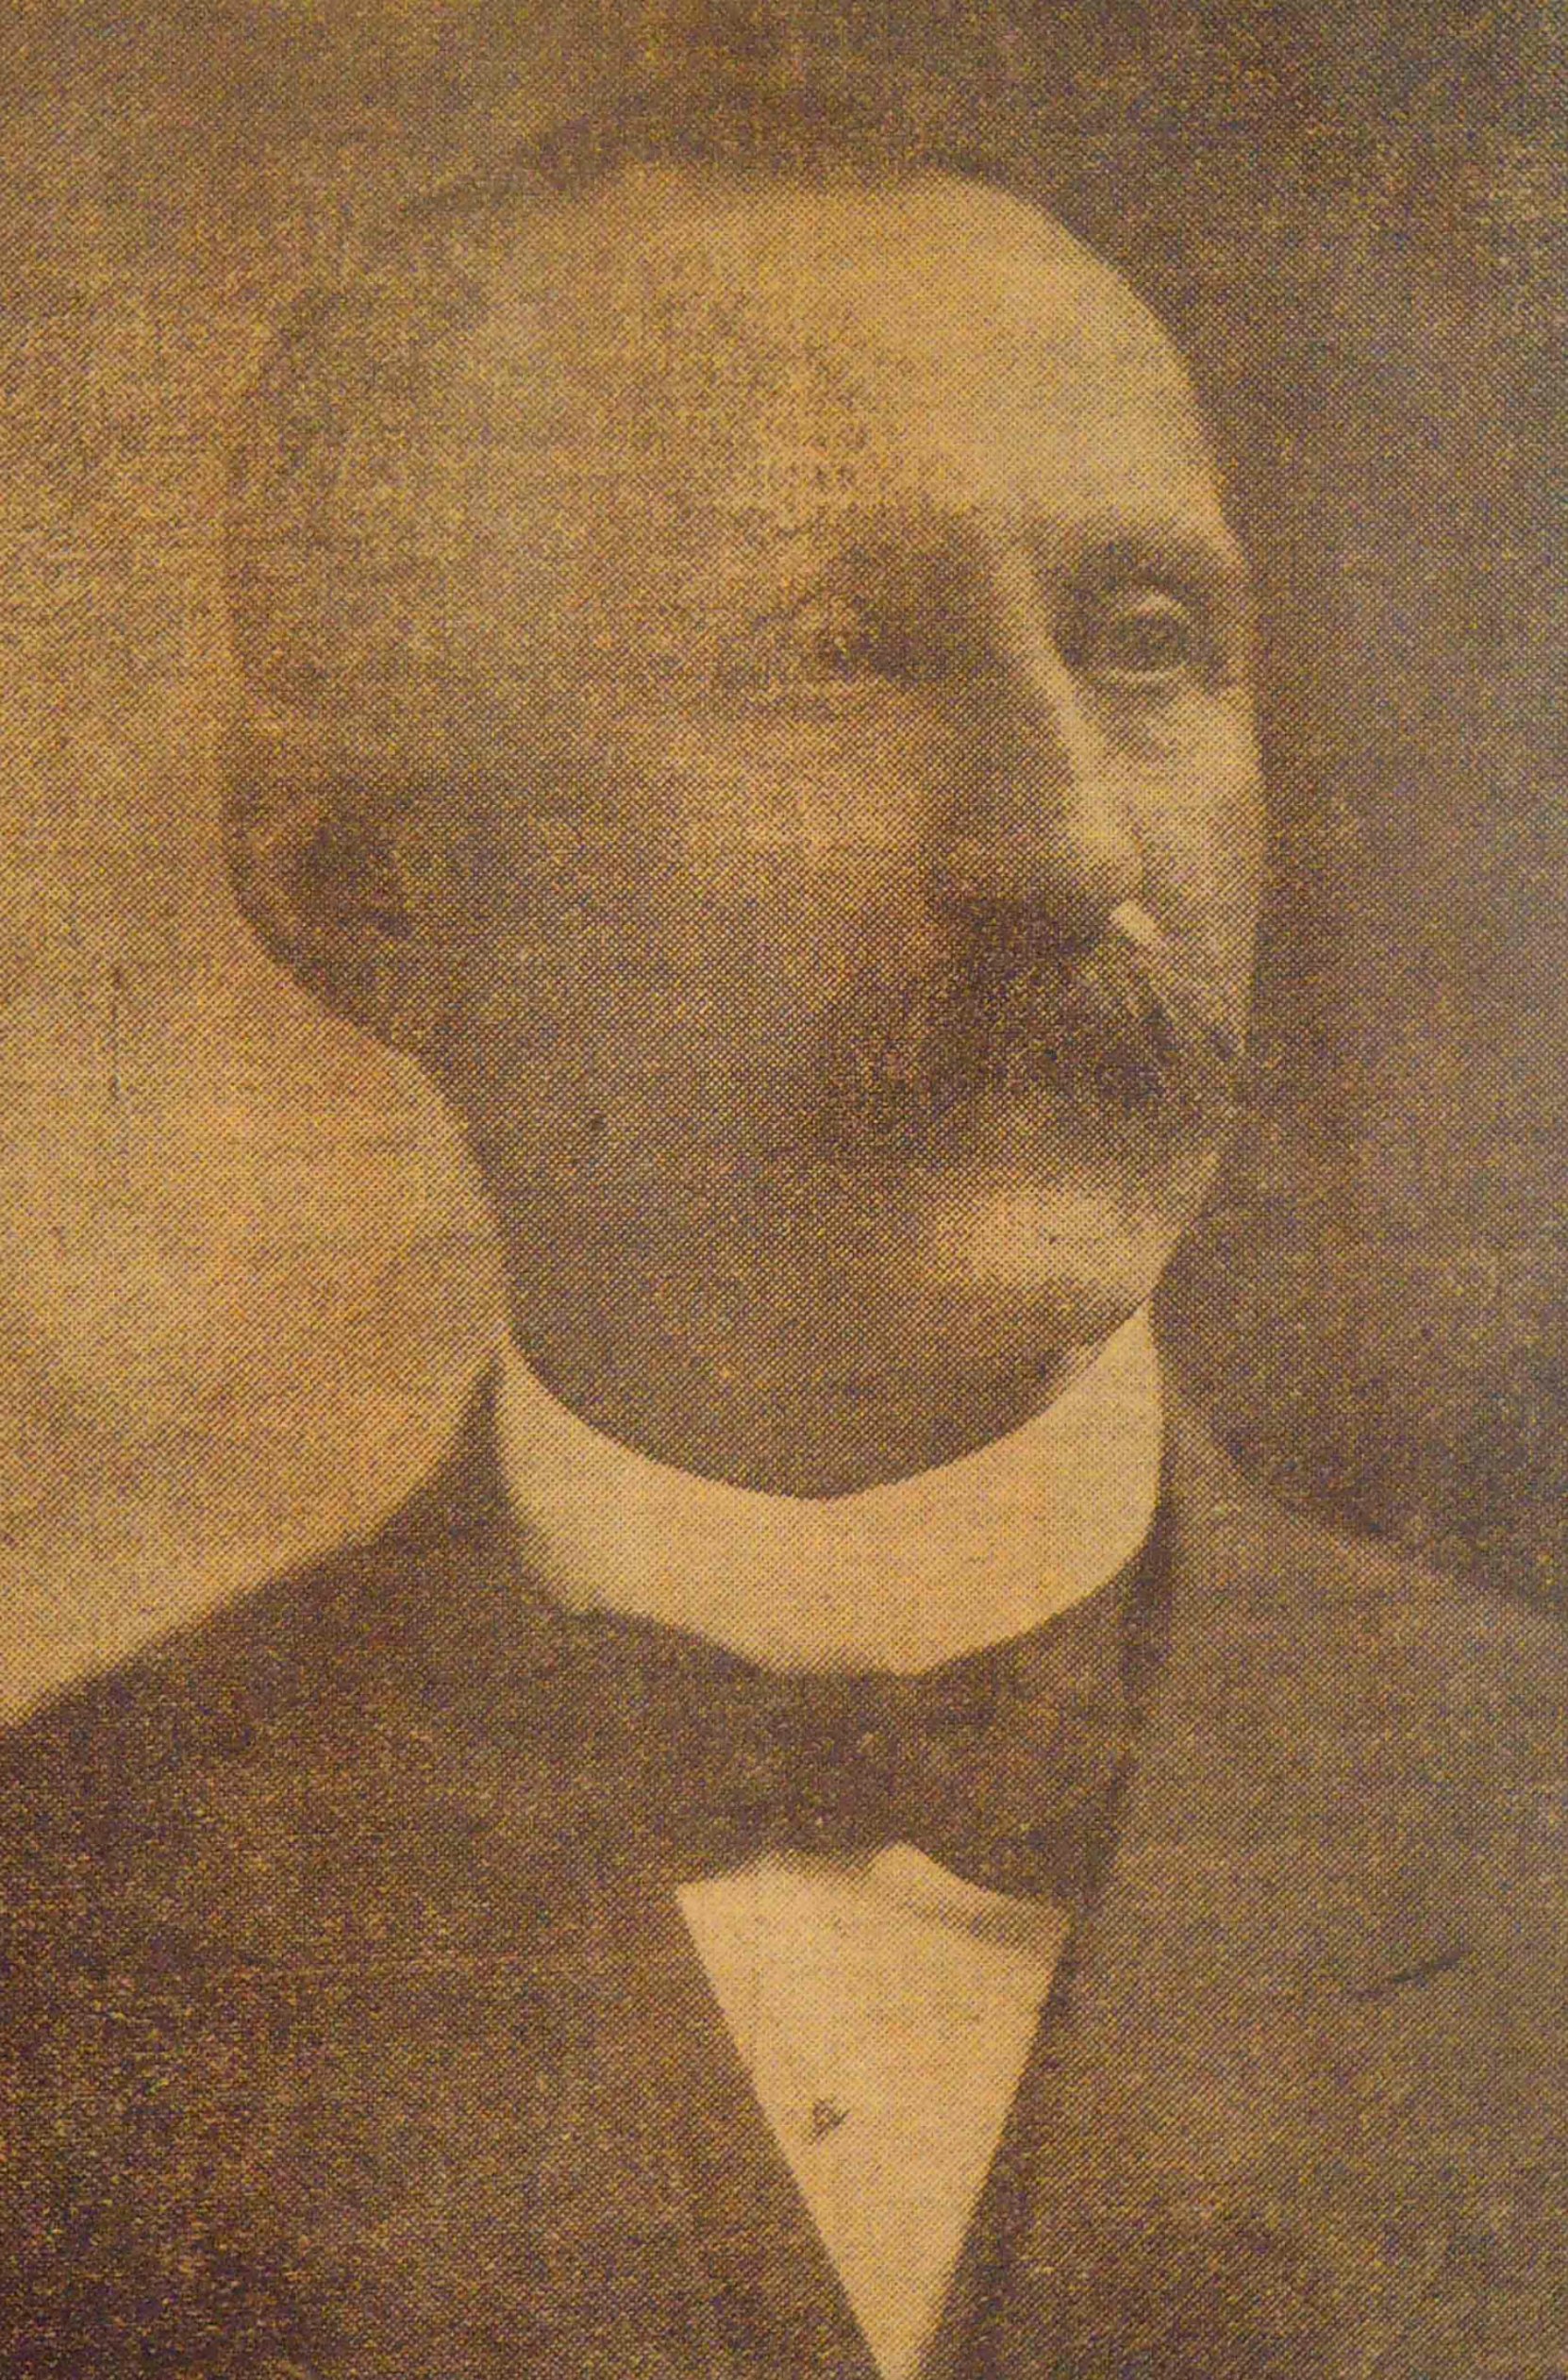 Simon Leiser (1851-1917)